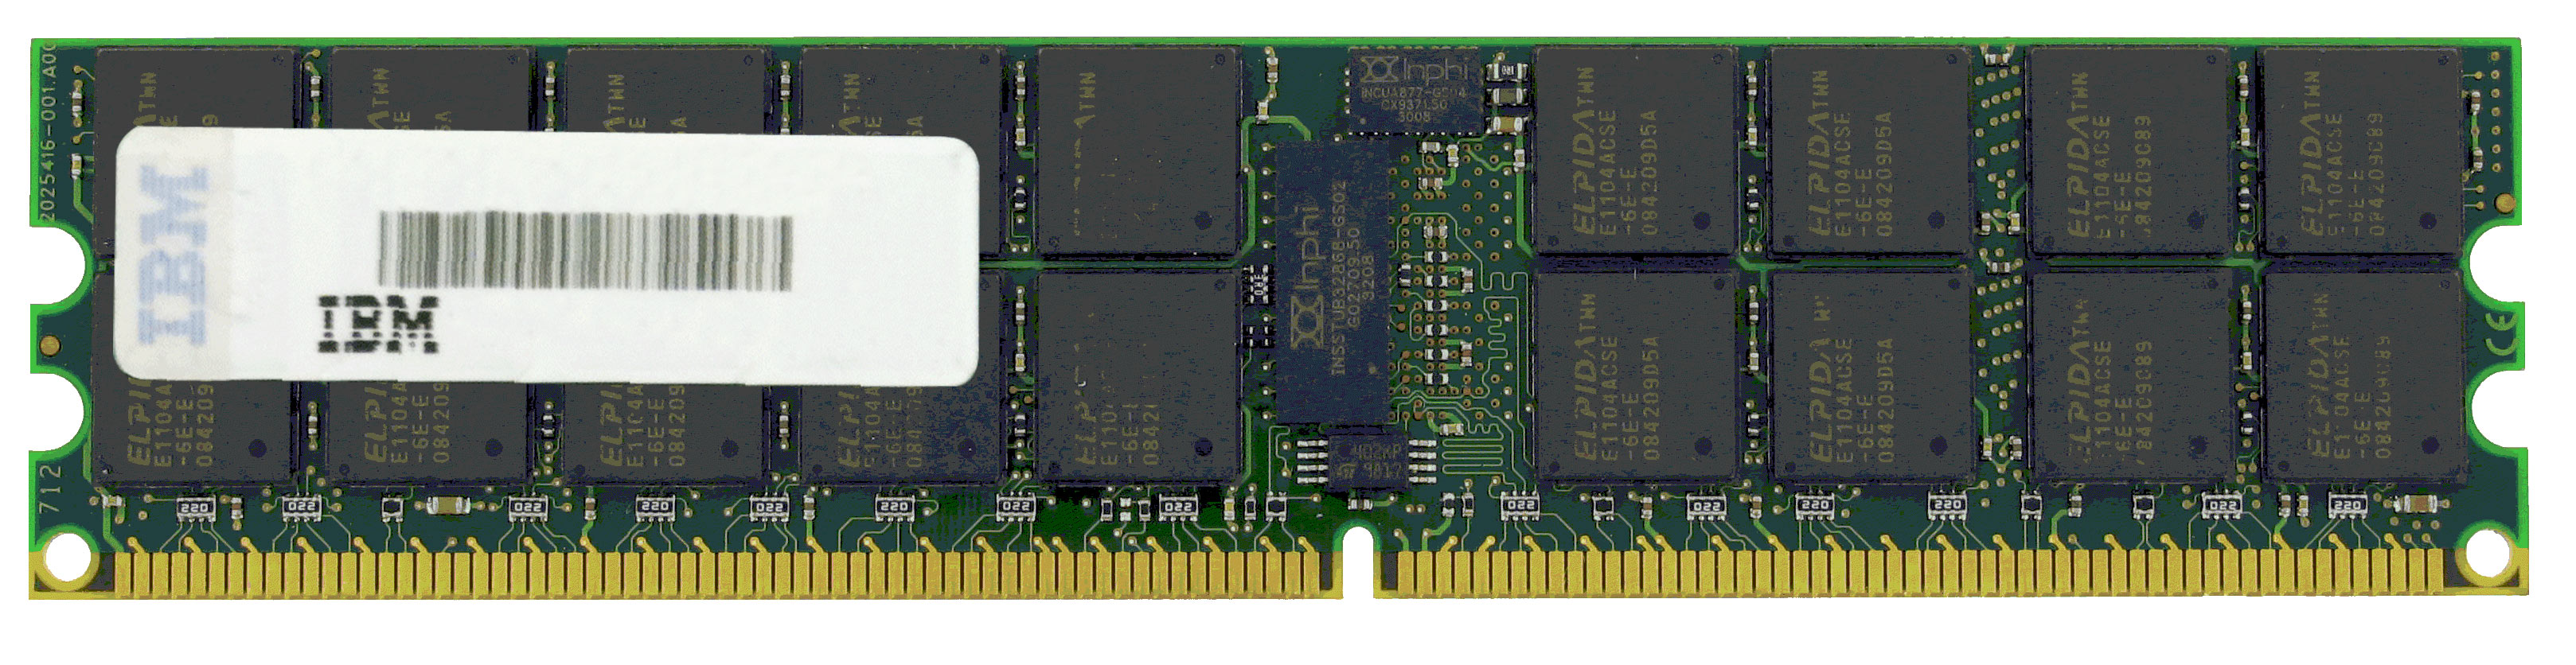 4450-9406 IBM 16GB Kit (4 X 4GB) PC2100 DDR-266MHz Registered ECC CL2.5 208-Pin DIMM 2.5V Memory for 520/550